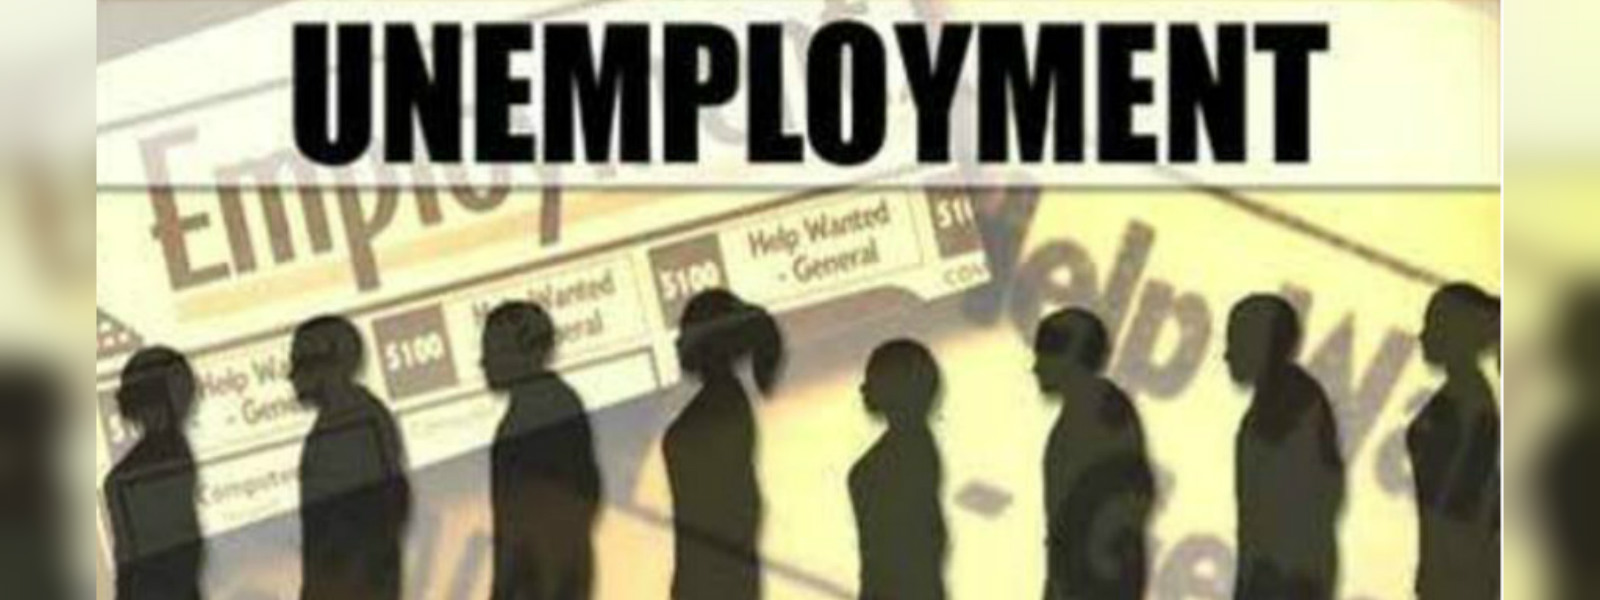 Sri Lanka's unemployment rate rises to 4.8 percent